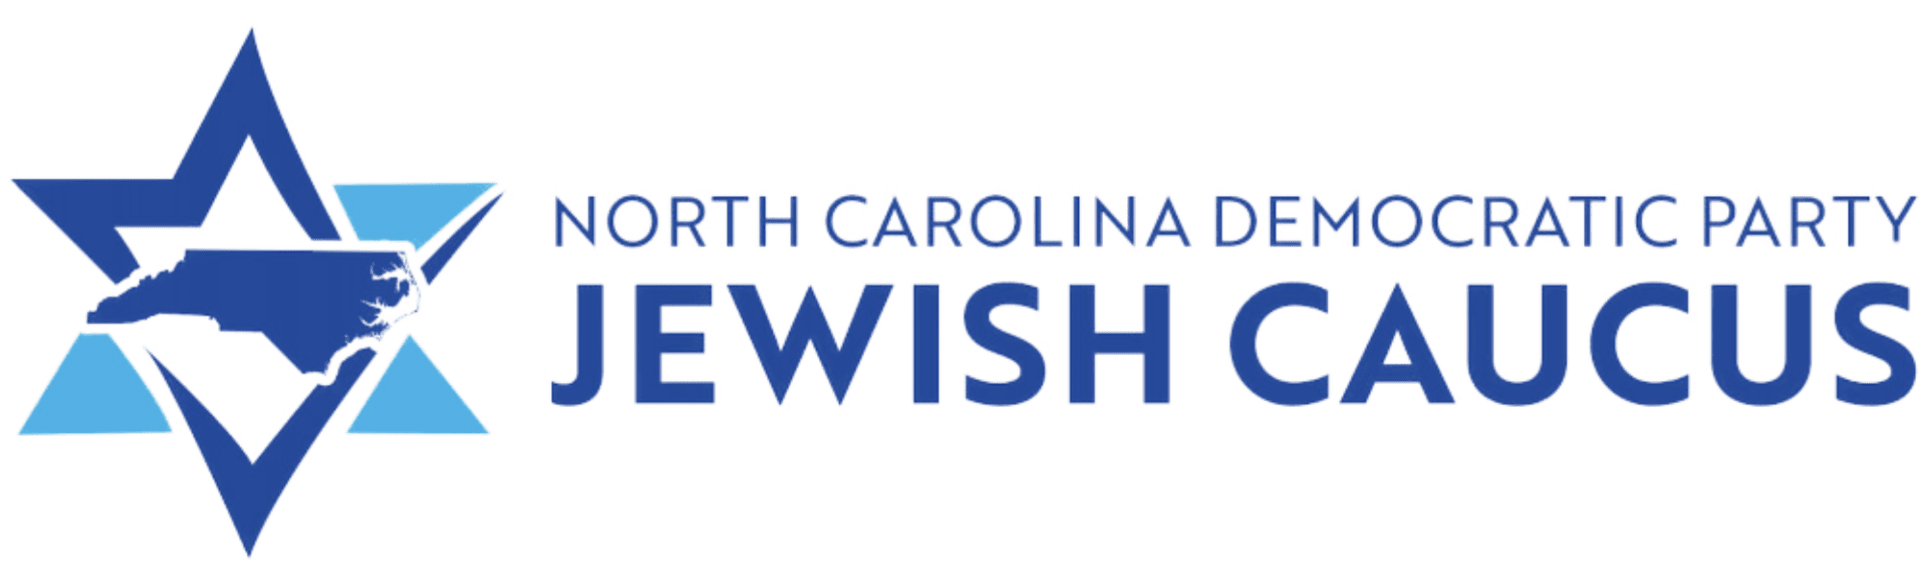 North Carolina Democratic Party Jewish Caucus